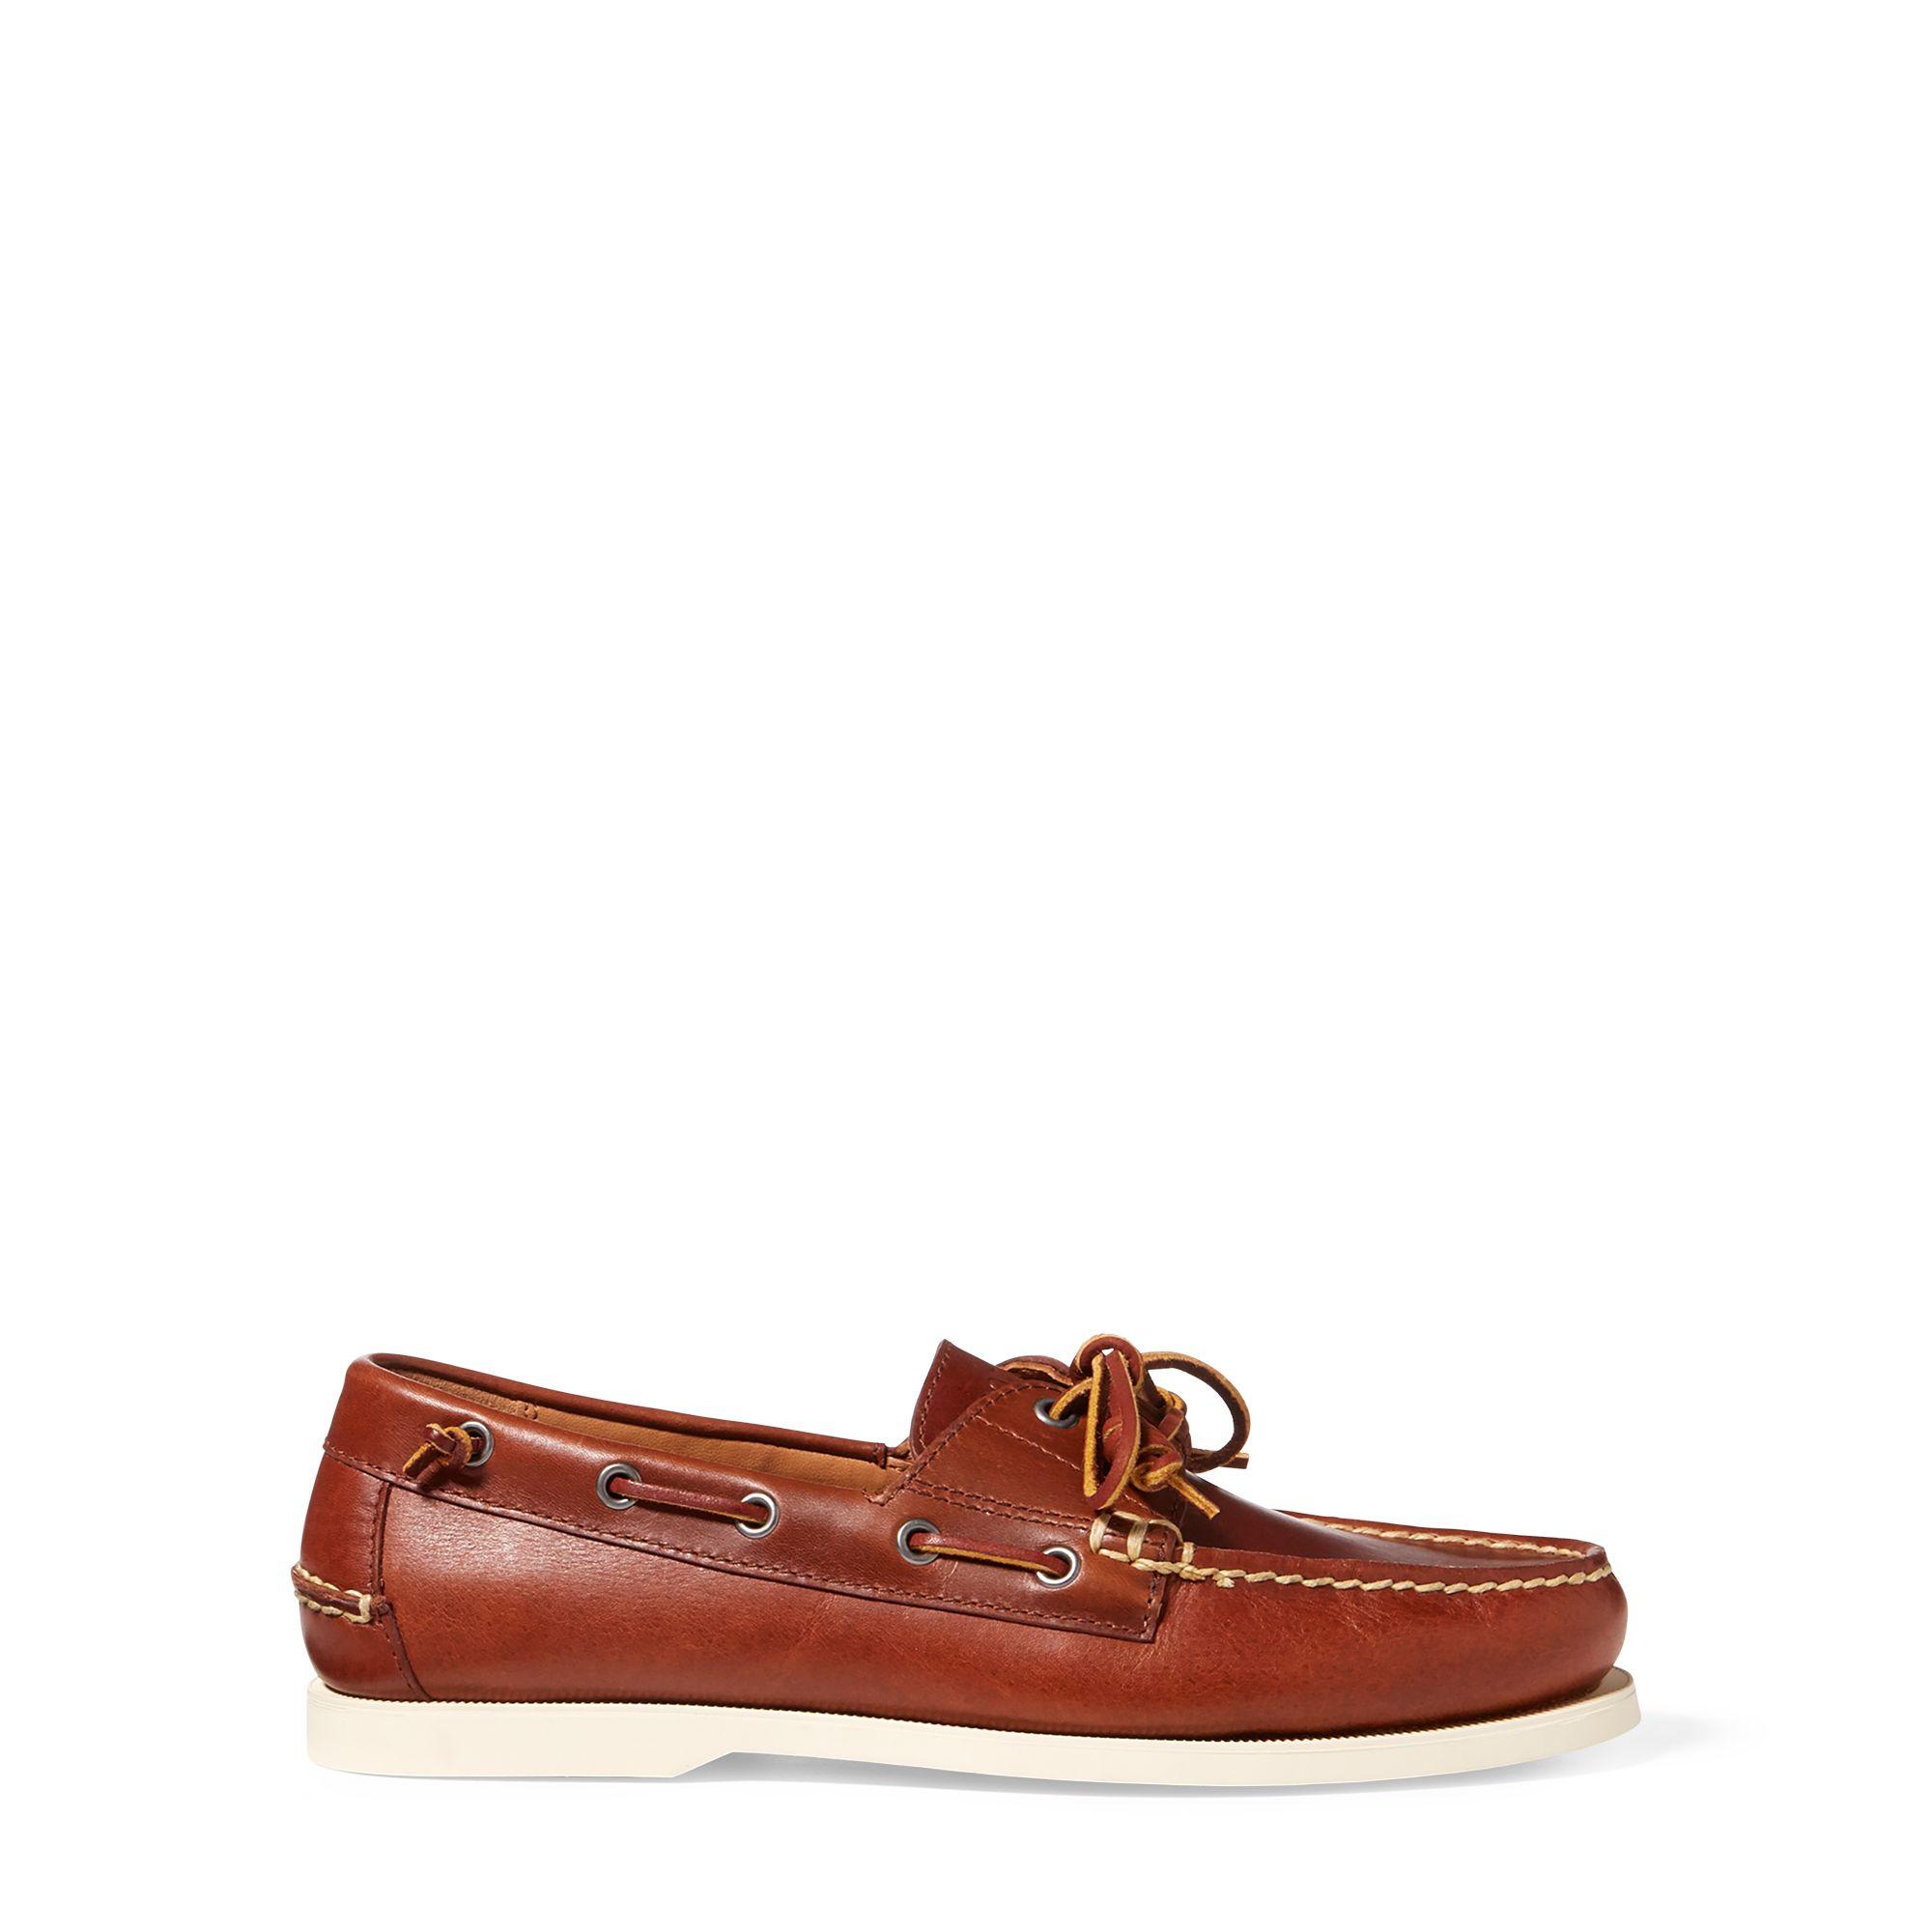 Polo Ralph Lauren Merton Leather Boat Shoe for Men - Lyst